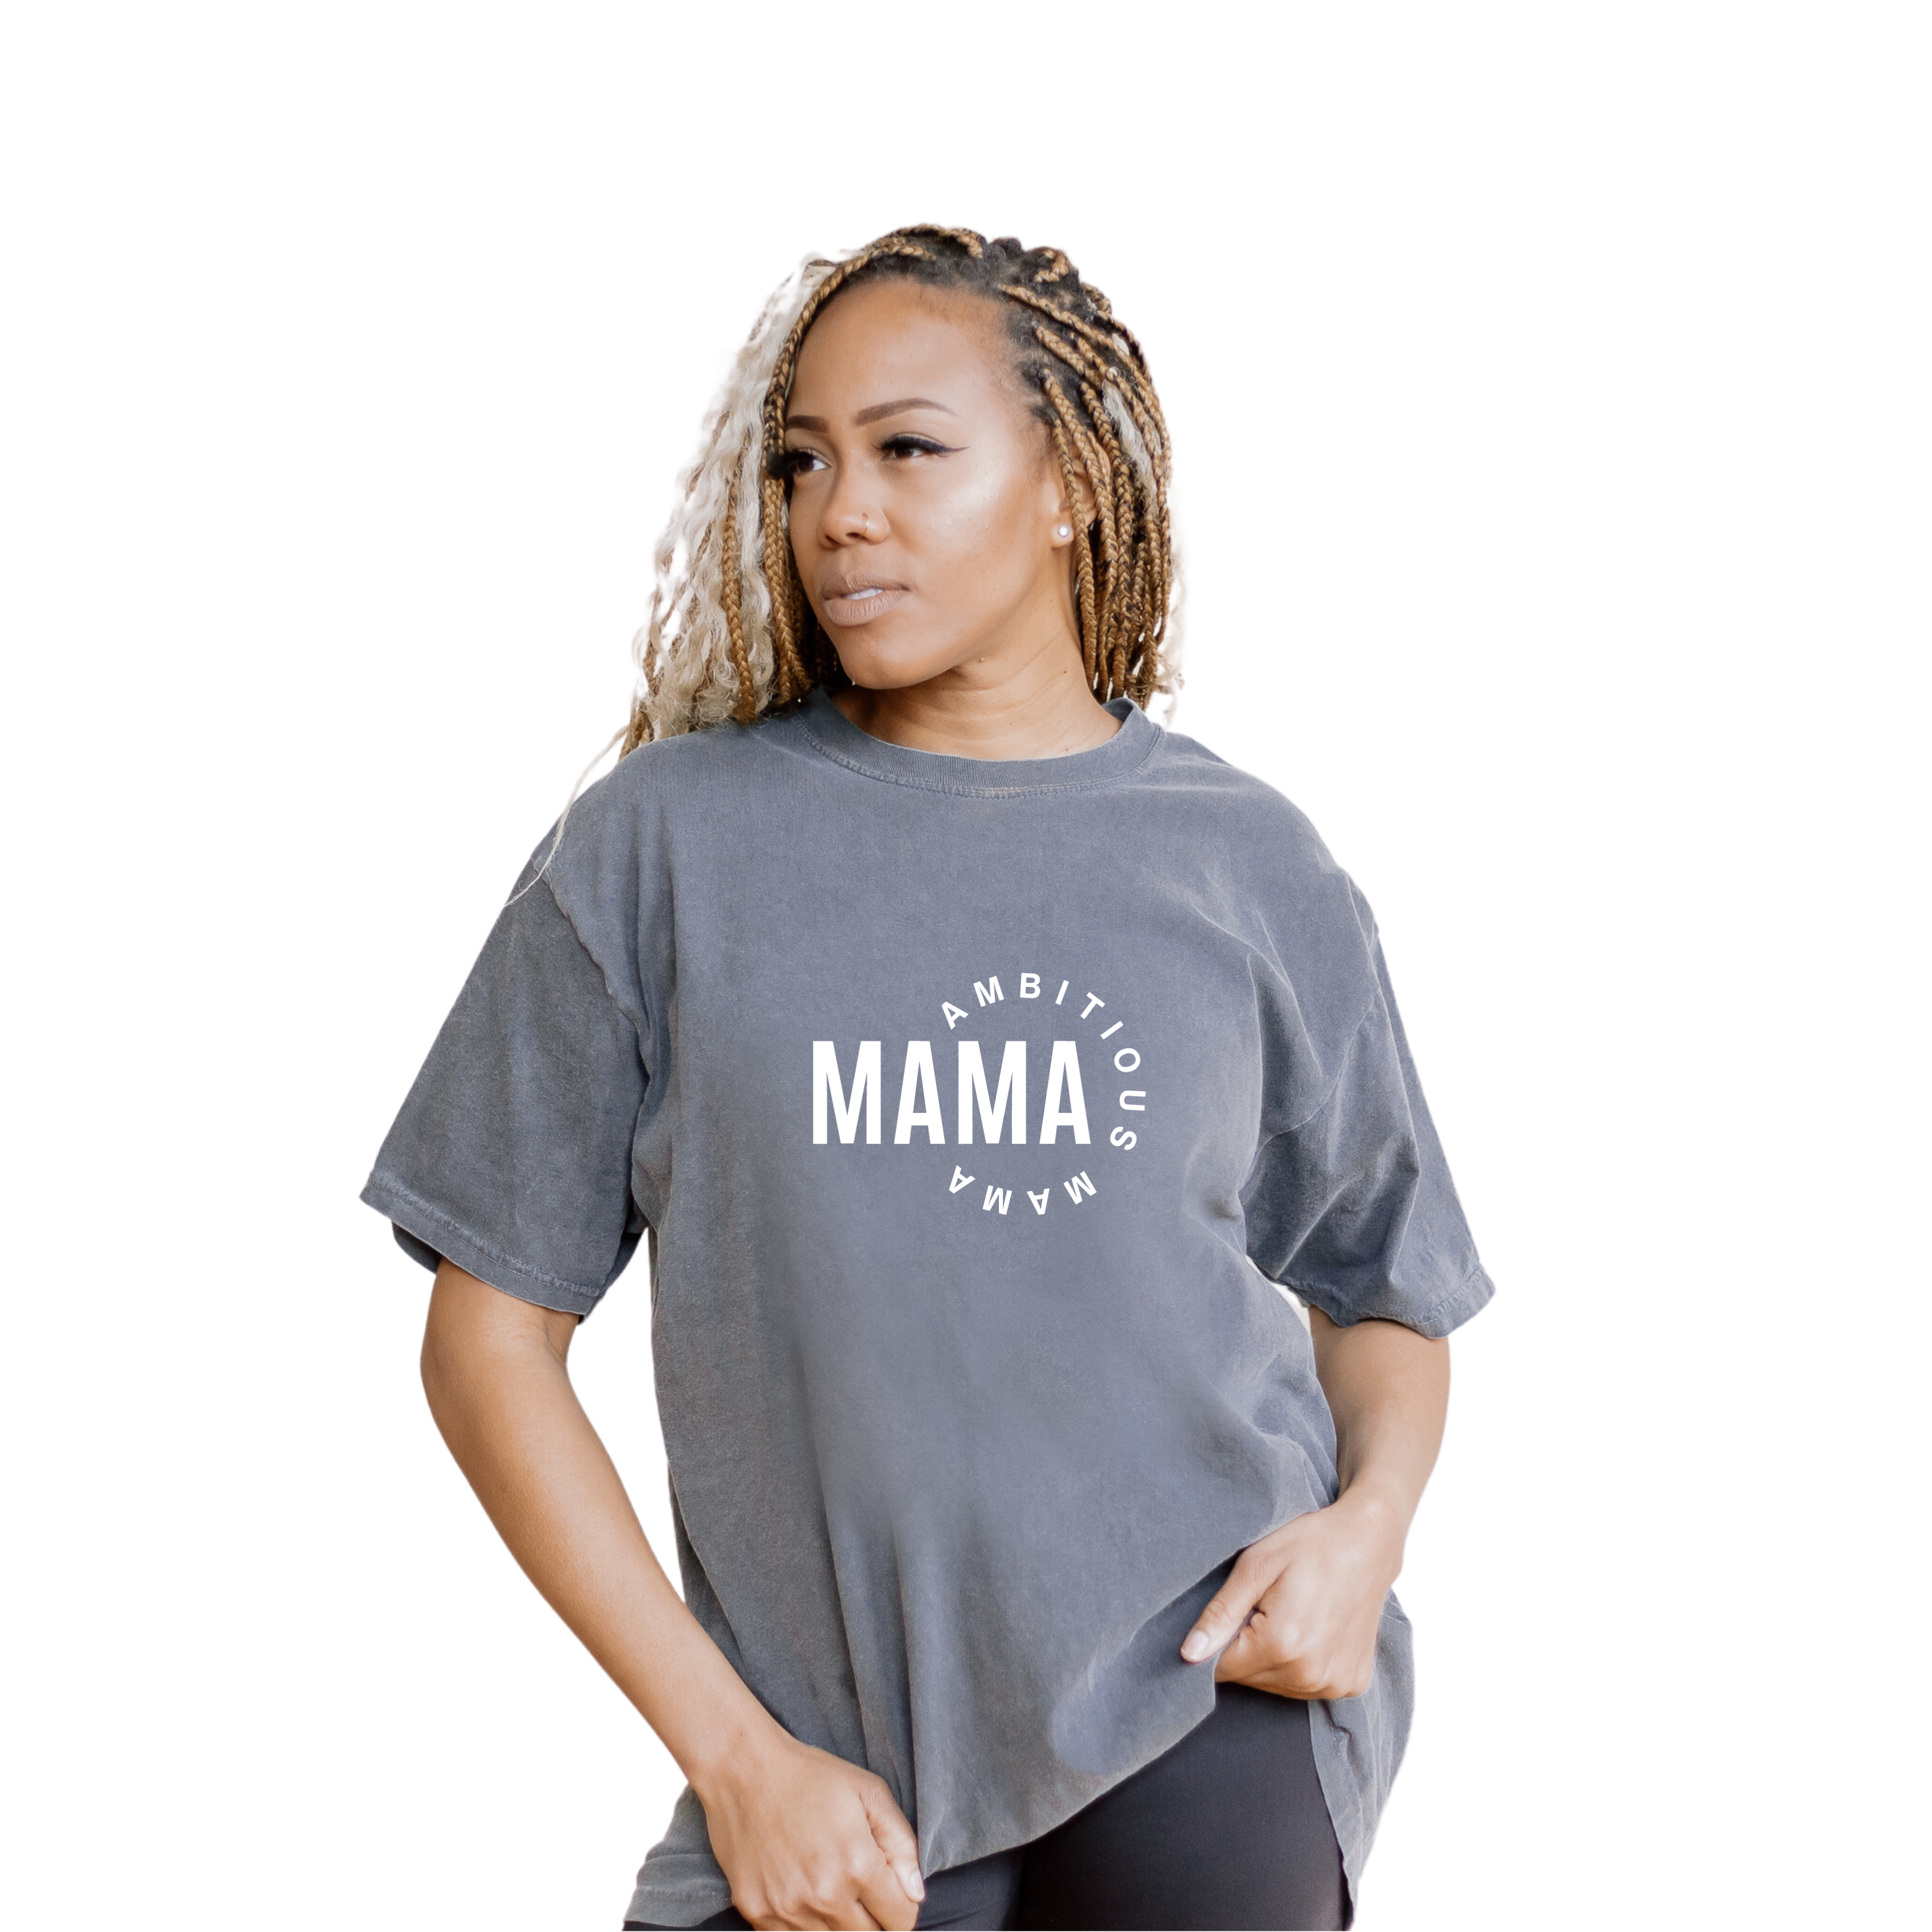 Ambitious Mama T-shirt